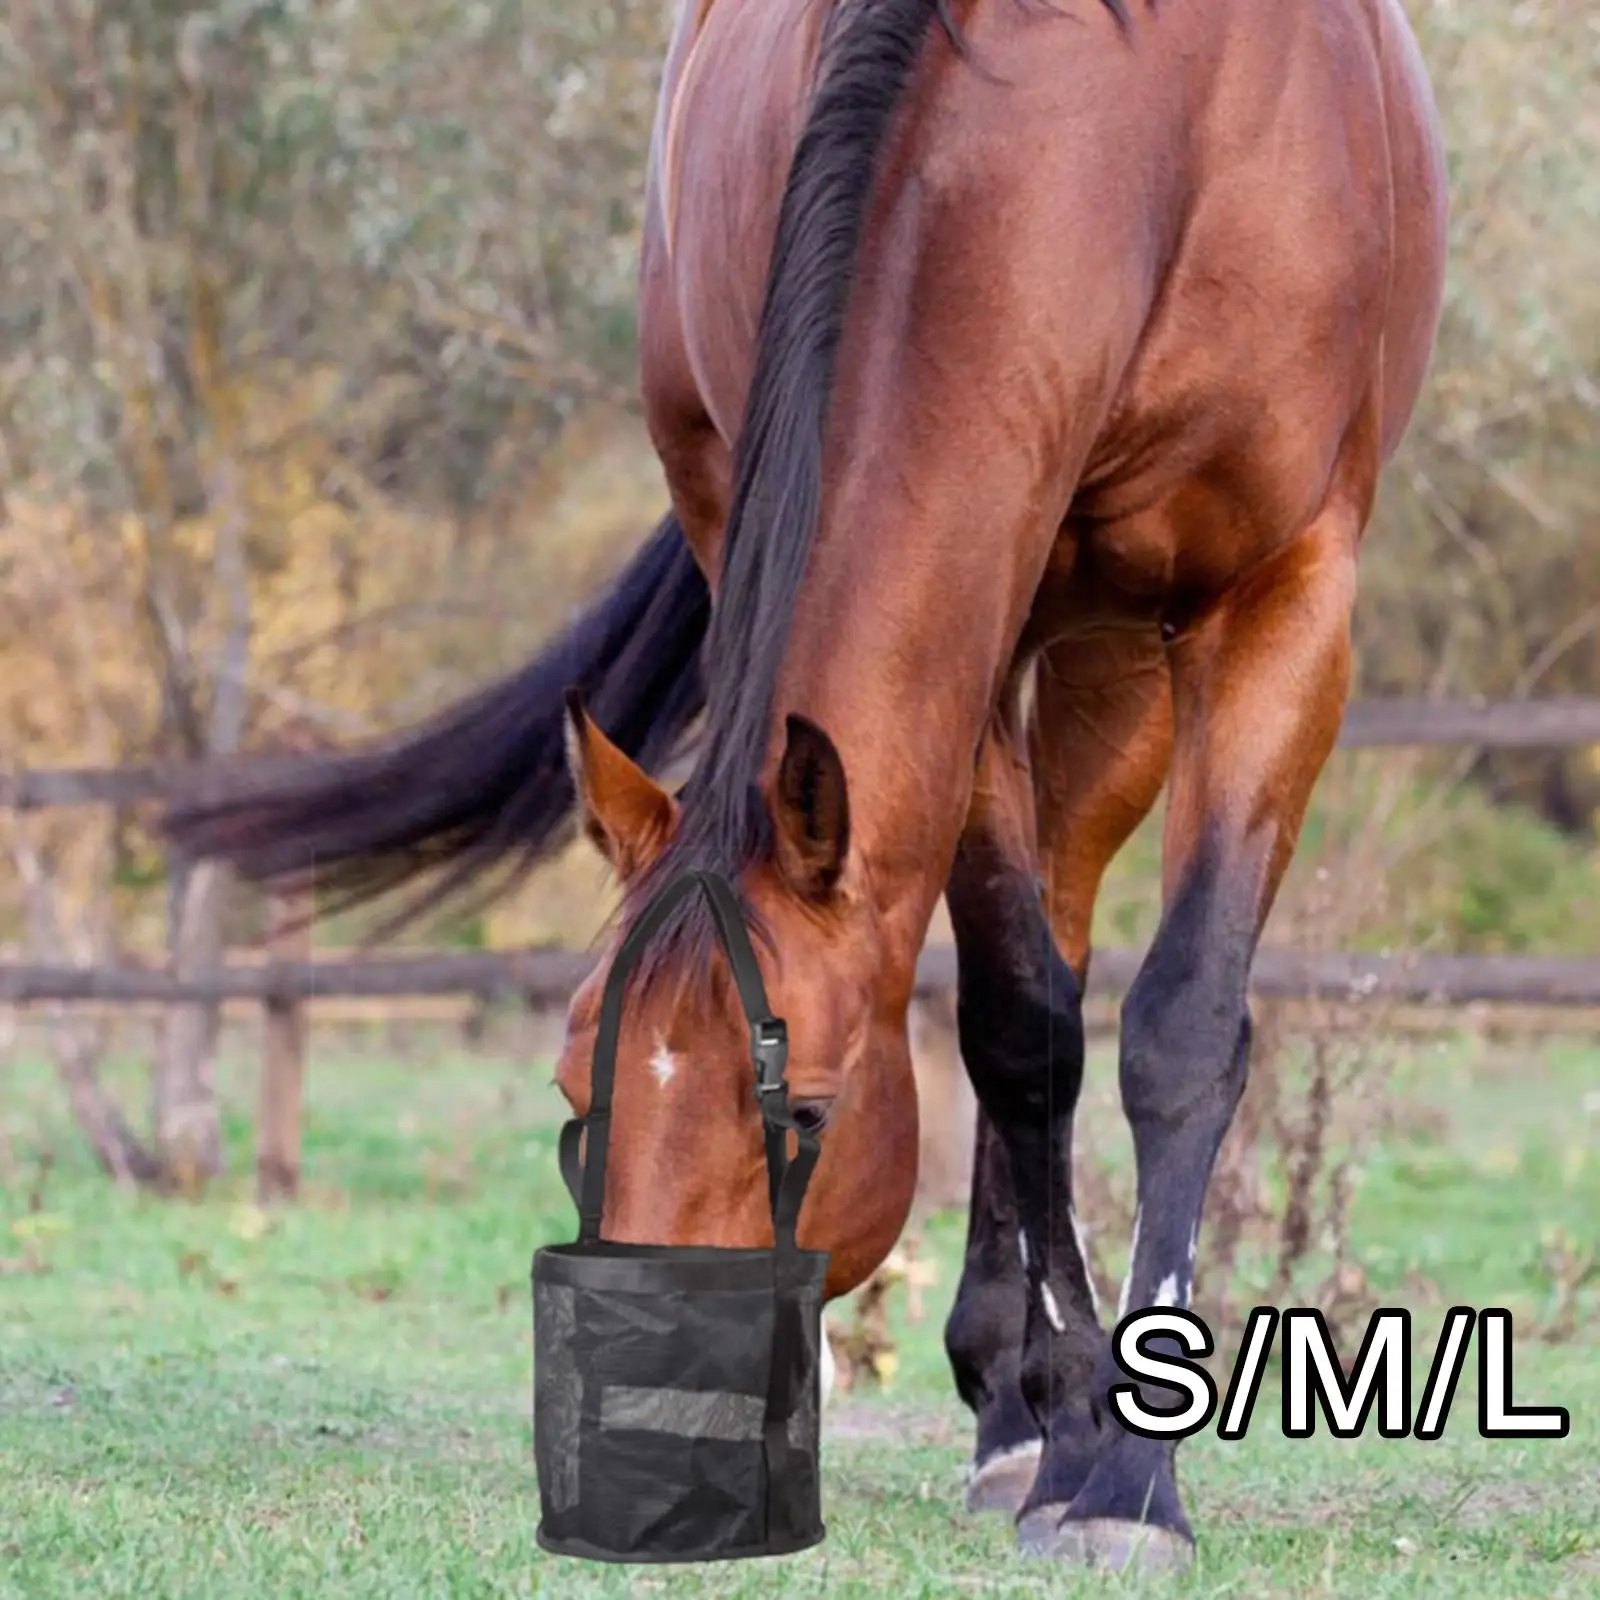 Durable Horse feed Bag Mesh Equipment Grain Feedbag Supplies Reinforced Bottom Adjustable for Hanging Equestrian Outdoor